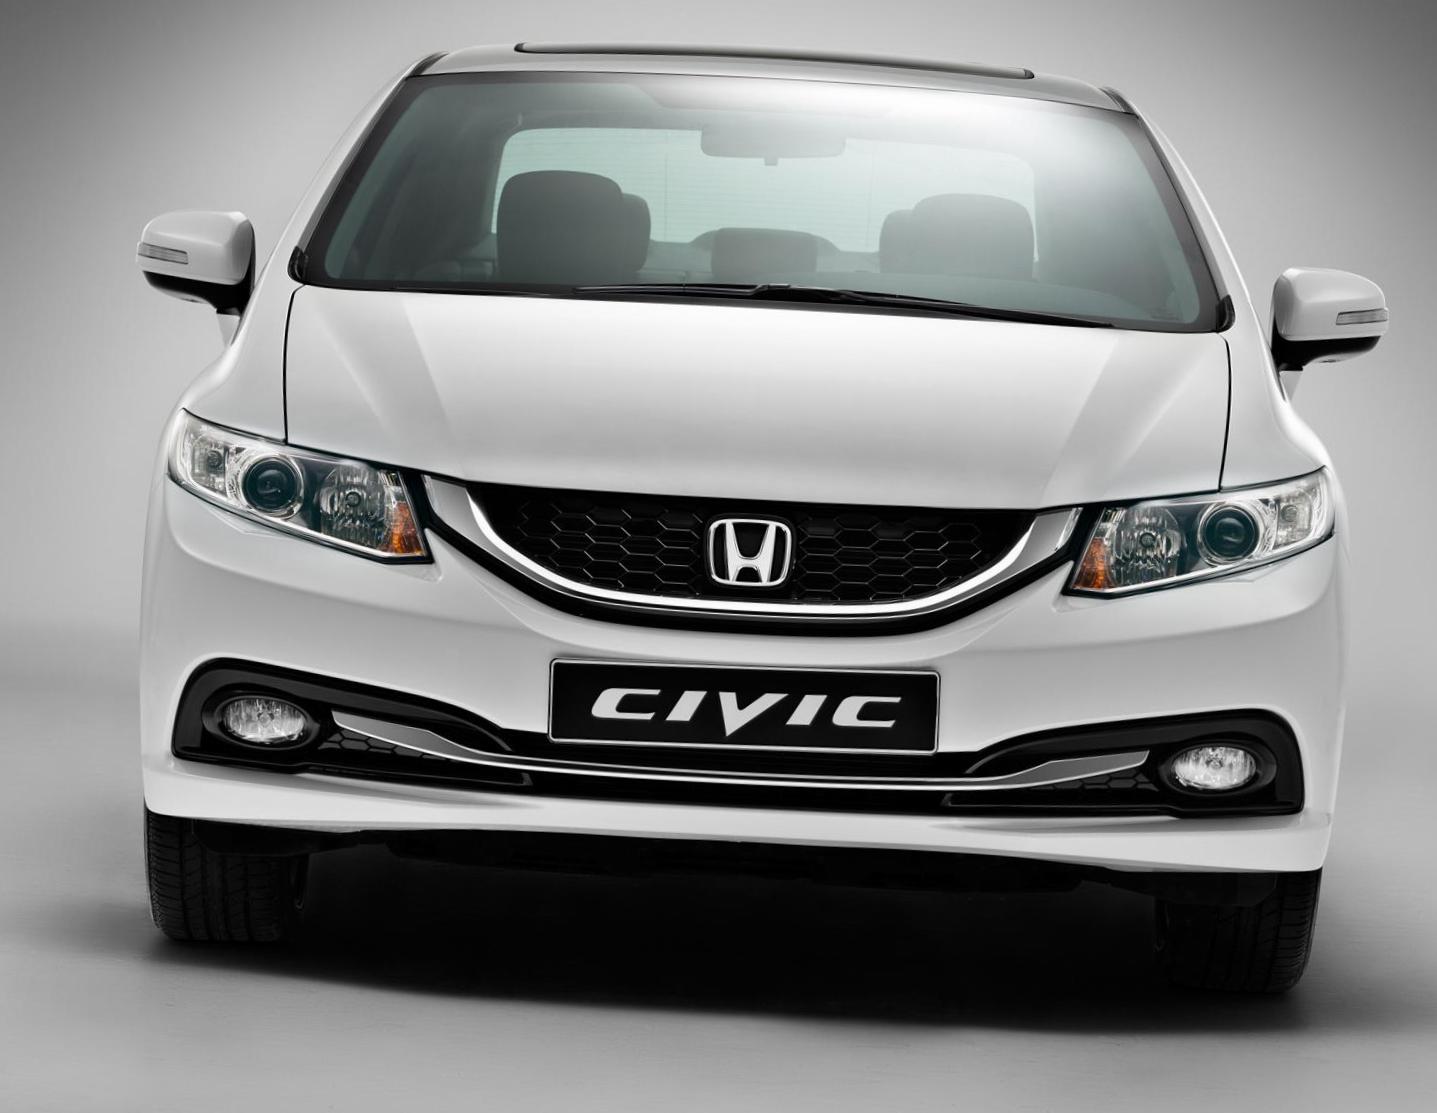 Civic 4D Honda auto 2015